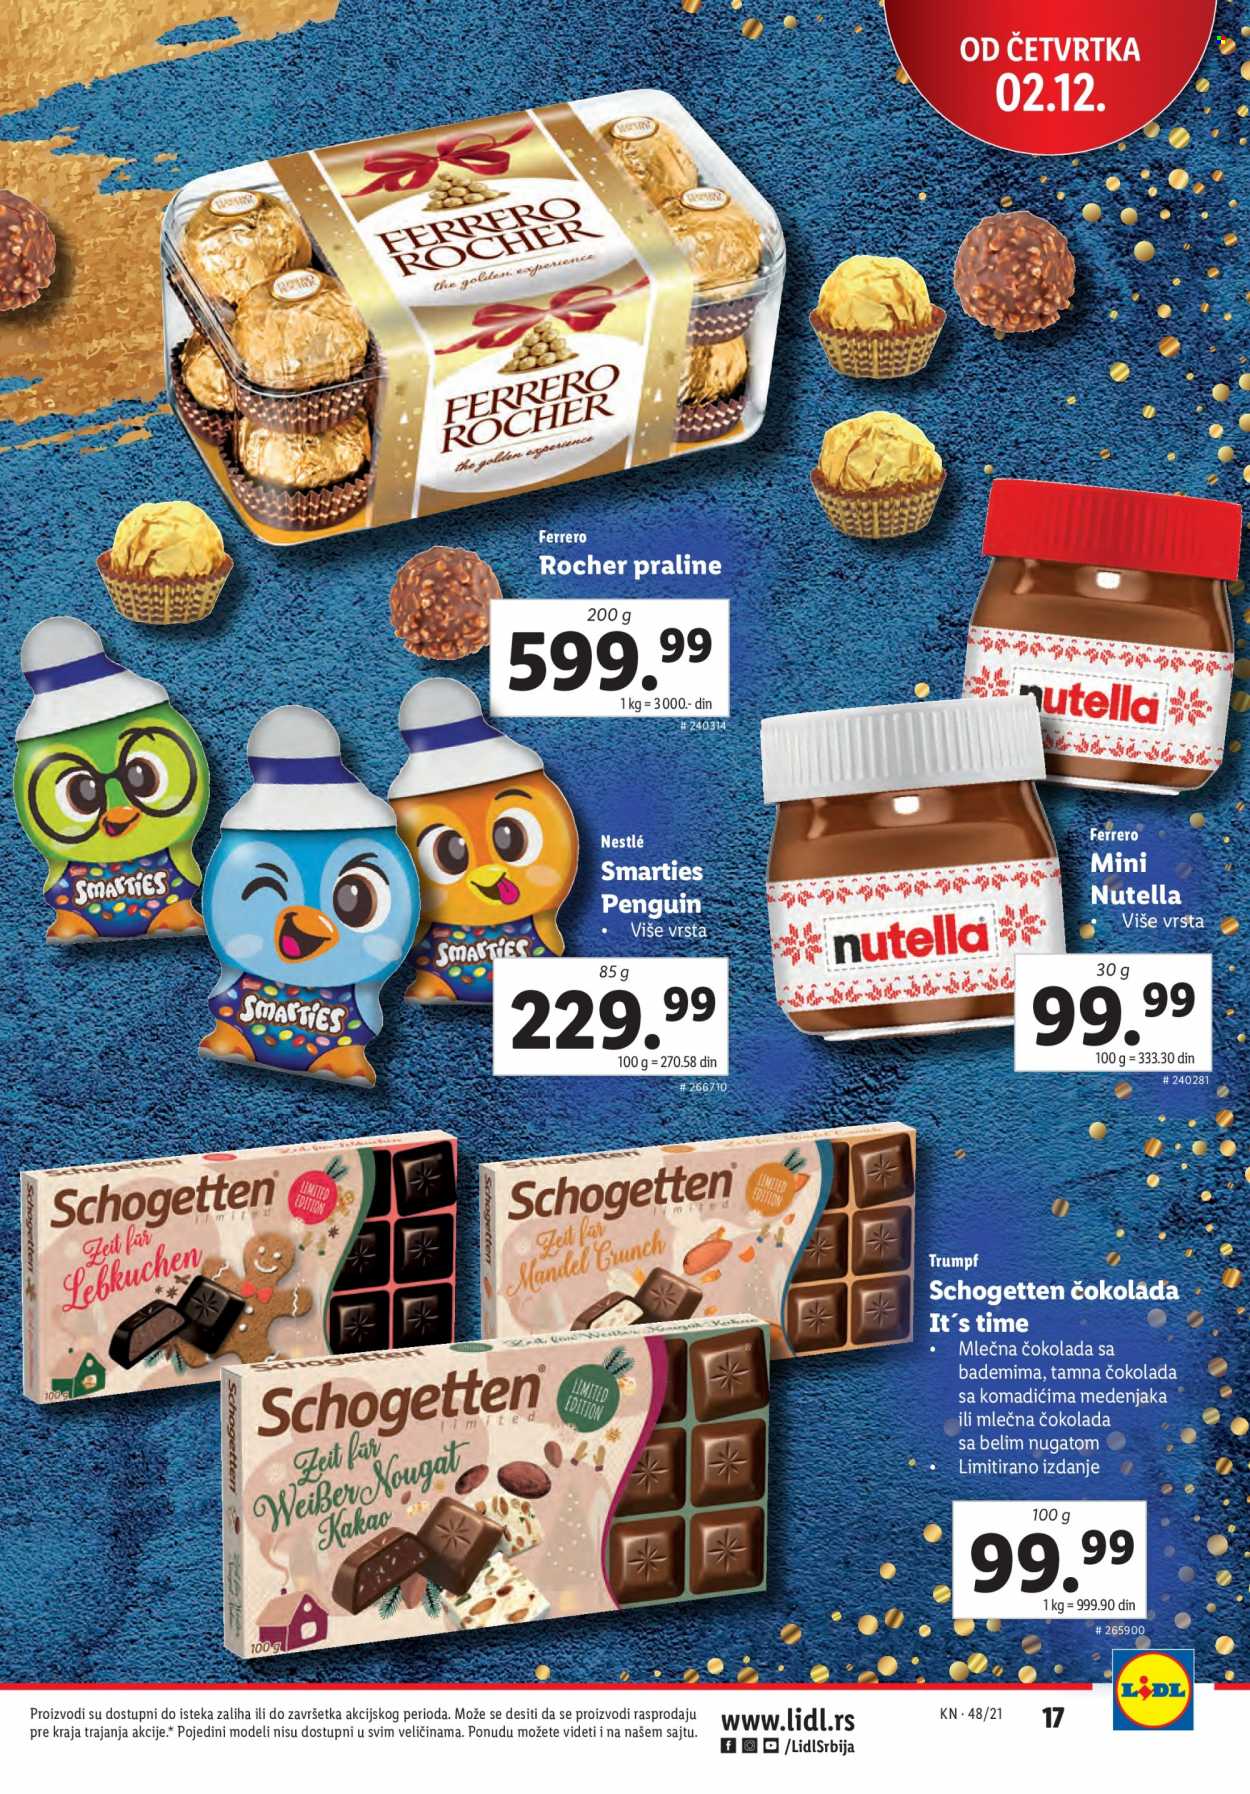 thumbnail - Lidl katalog - 02.12.2021 - 08.12.2021 - Proizvodi na akciji - čokolada, smarties, Nutella, Nestlé, Schogetten, praline, Ferrero, kakao. Stranica 17.